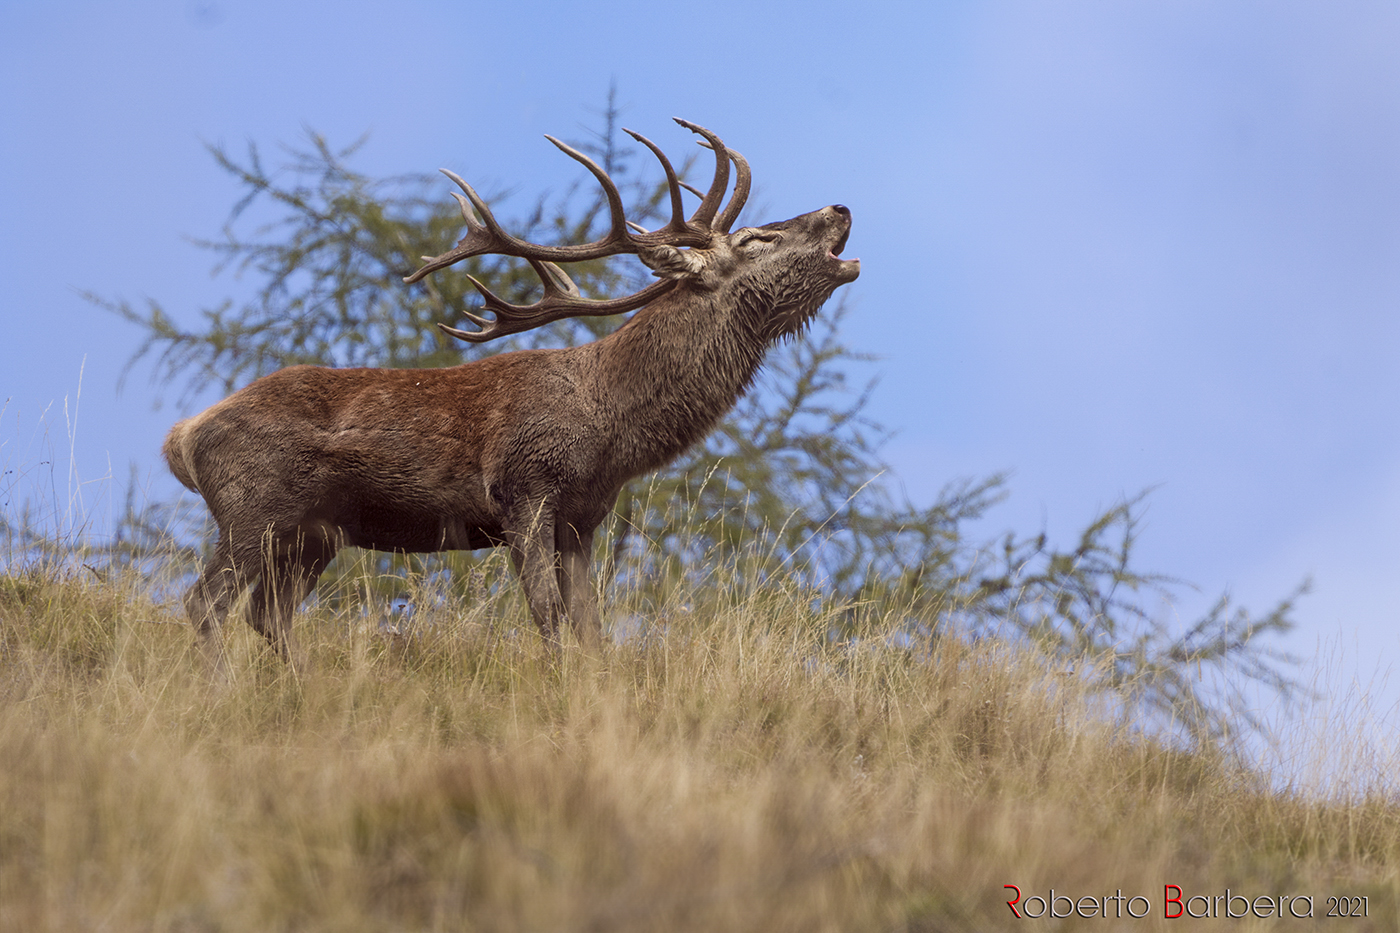 Crowned to the roar. Noble deer, Alpes-Maritimes...